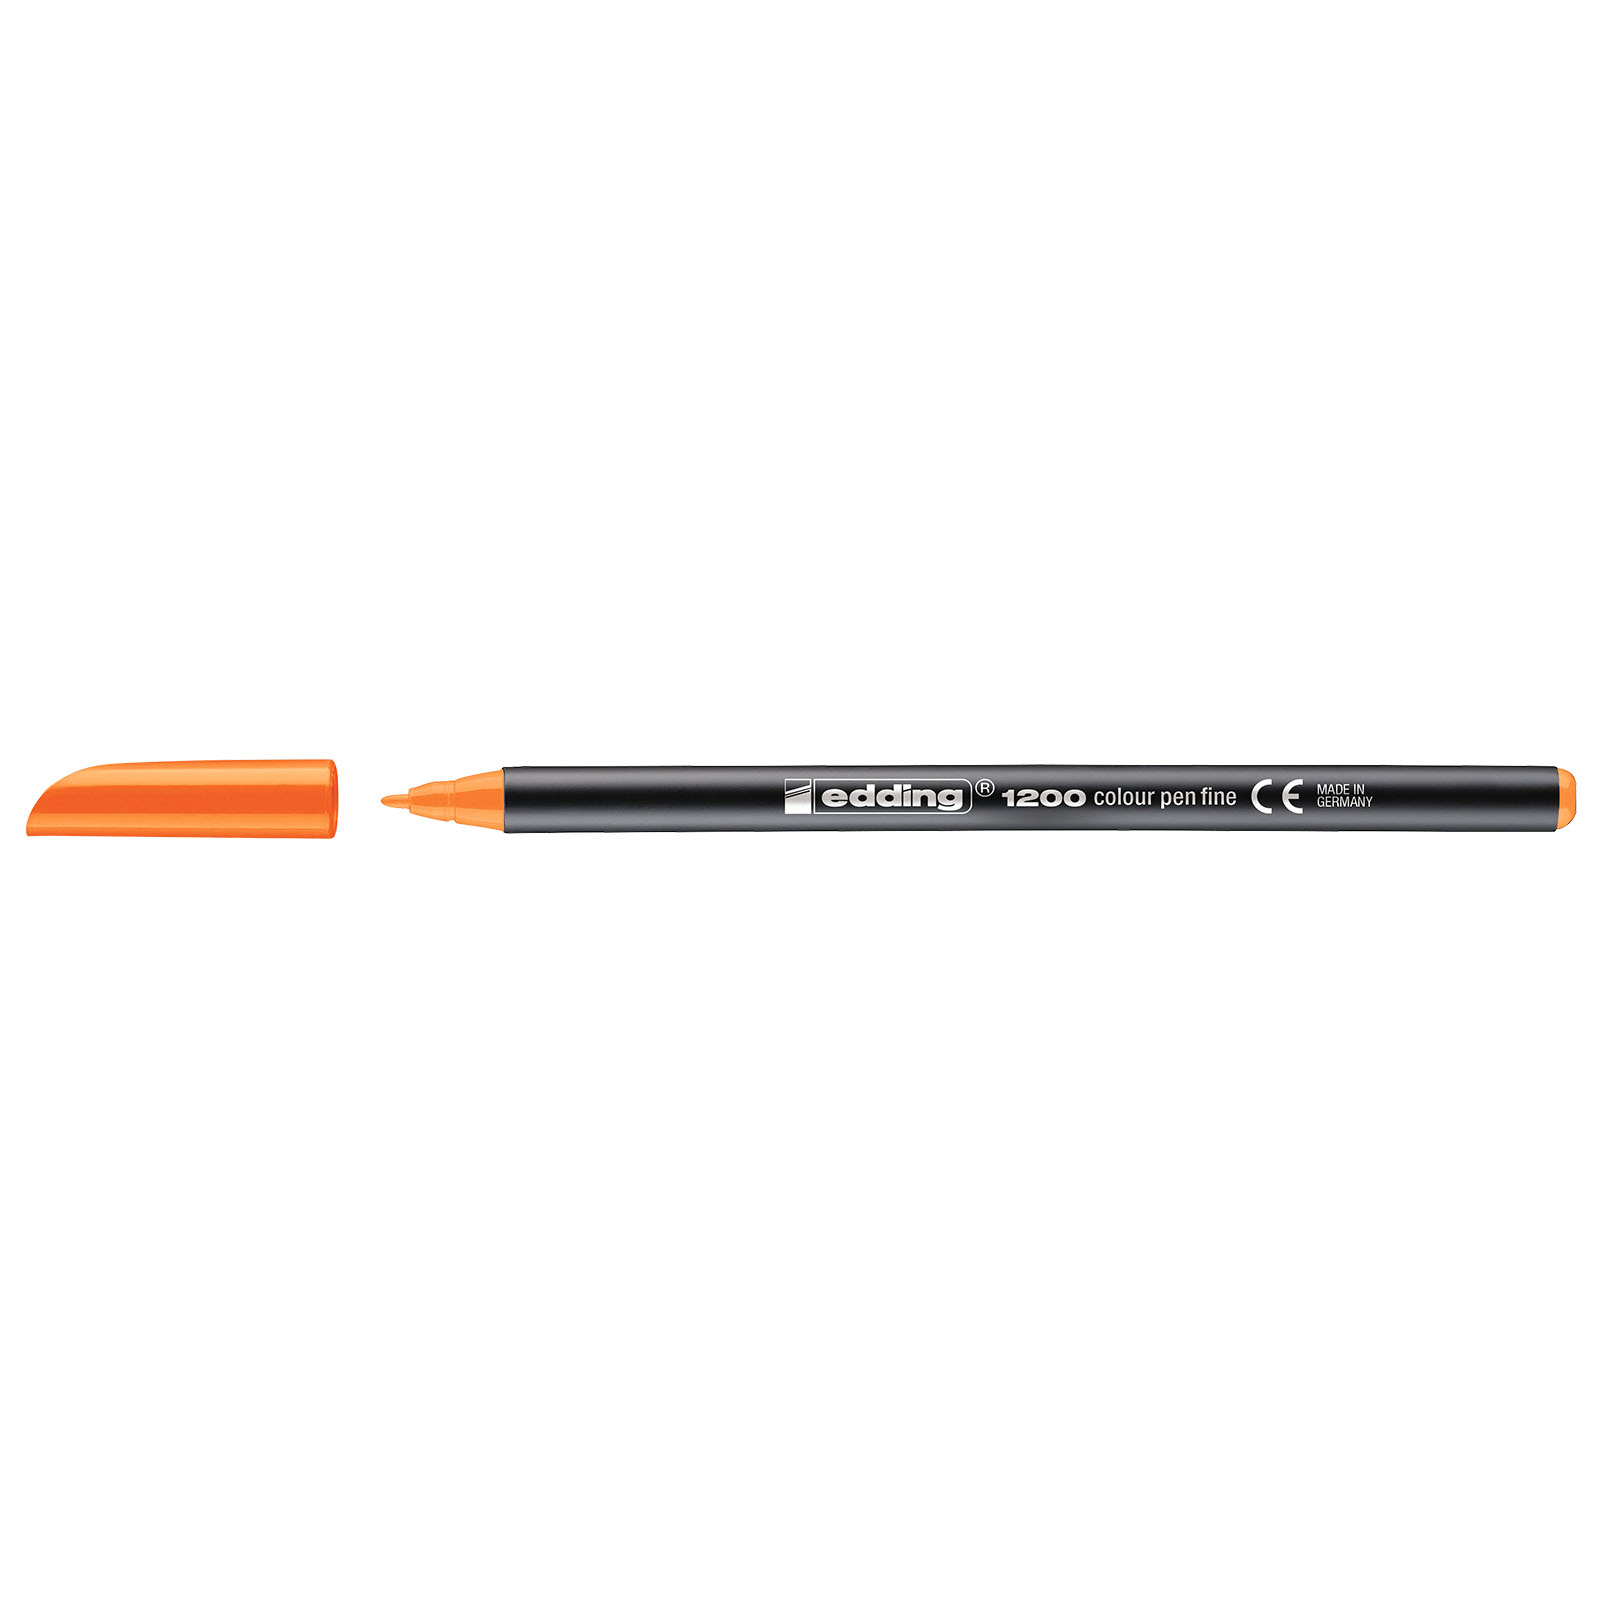 Edding 1200 • Colour pen fine 0.5-1mm Neon orange